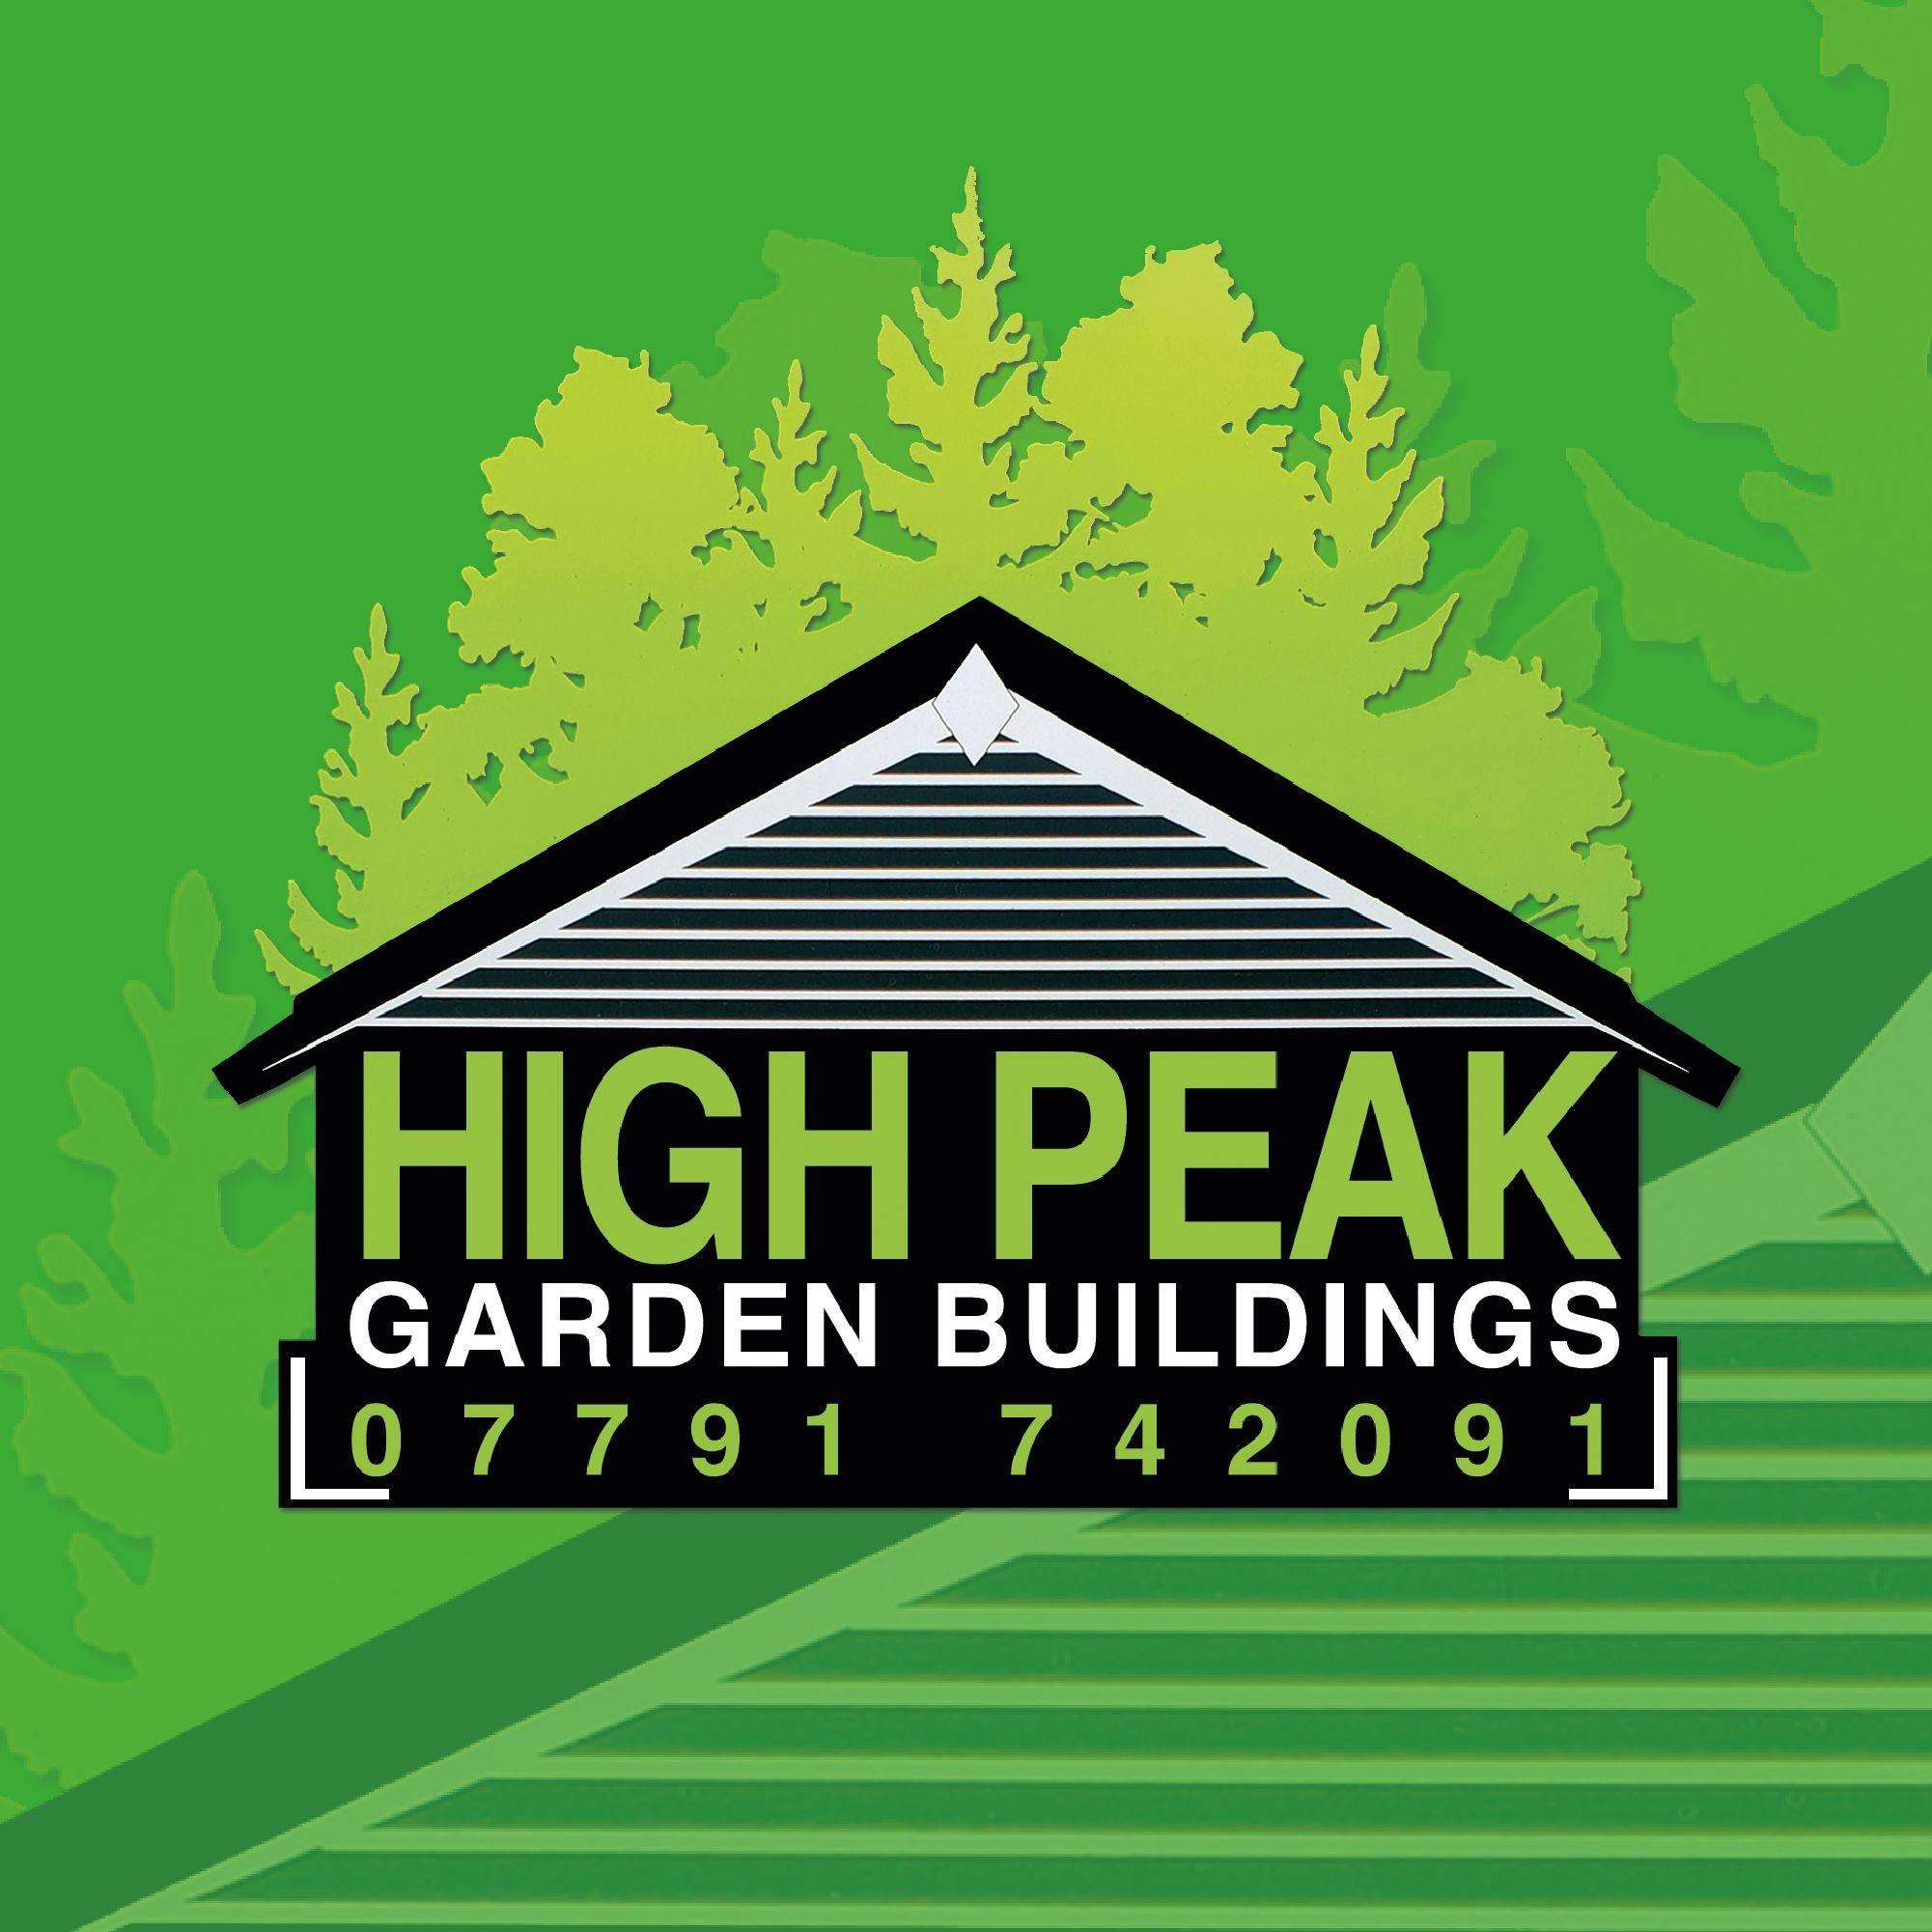 High Peak Garden Buildings - Hope Valley, Derbyshire S33 0AL - 07791 742091 | ShowMeLocal.com